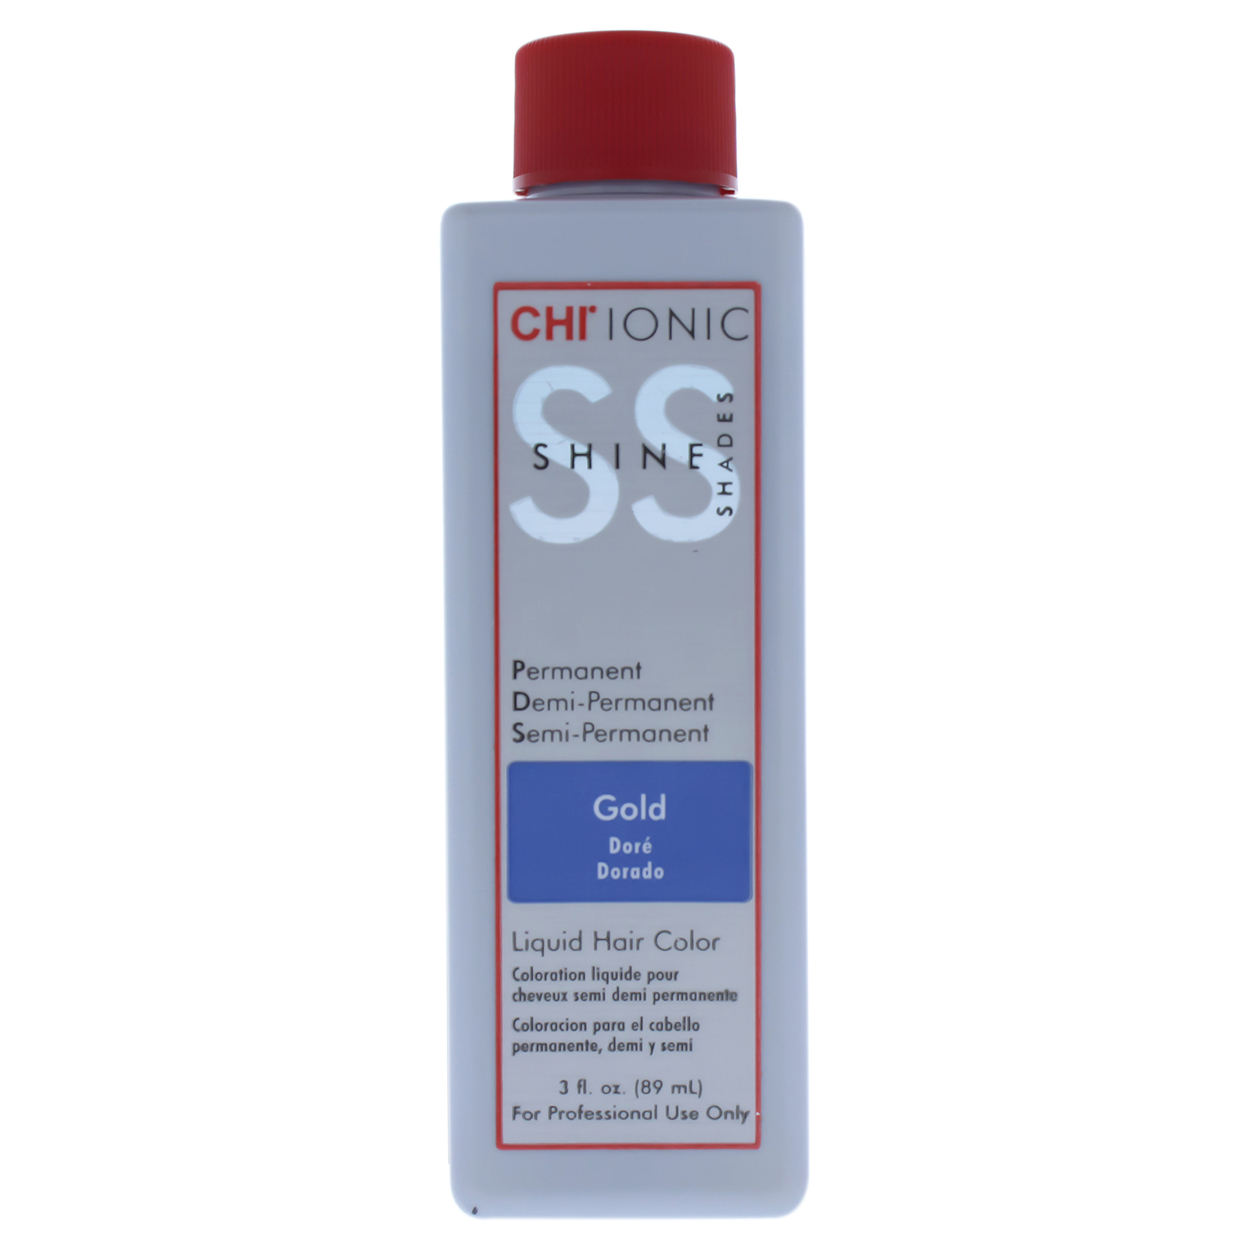 CHI Ionic Shine Shades Liquid Hair Color - Gold 3 Oz